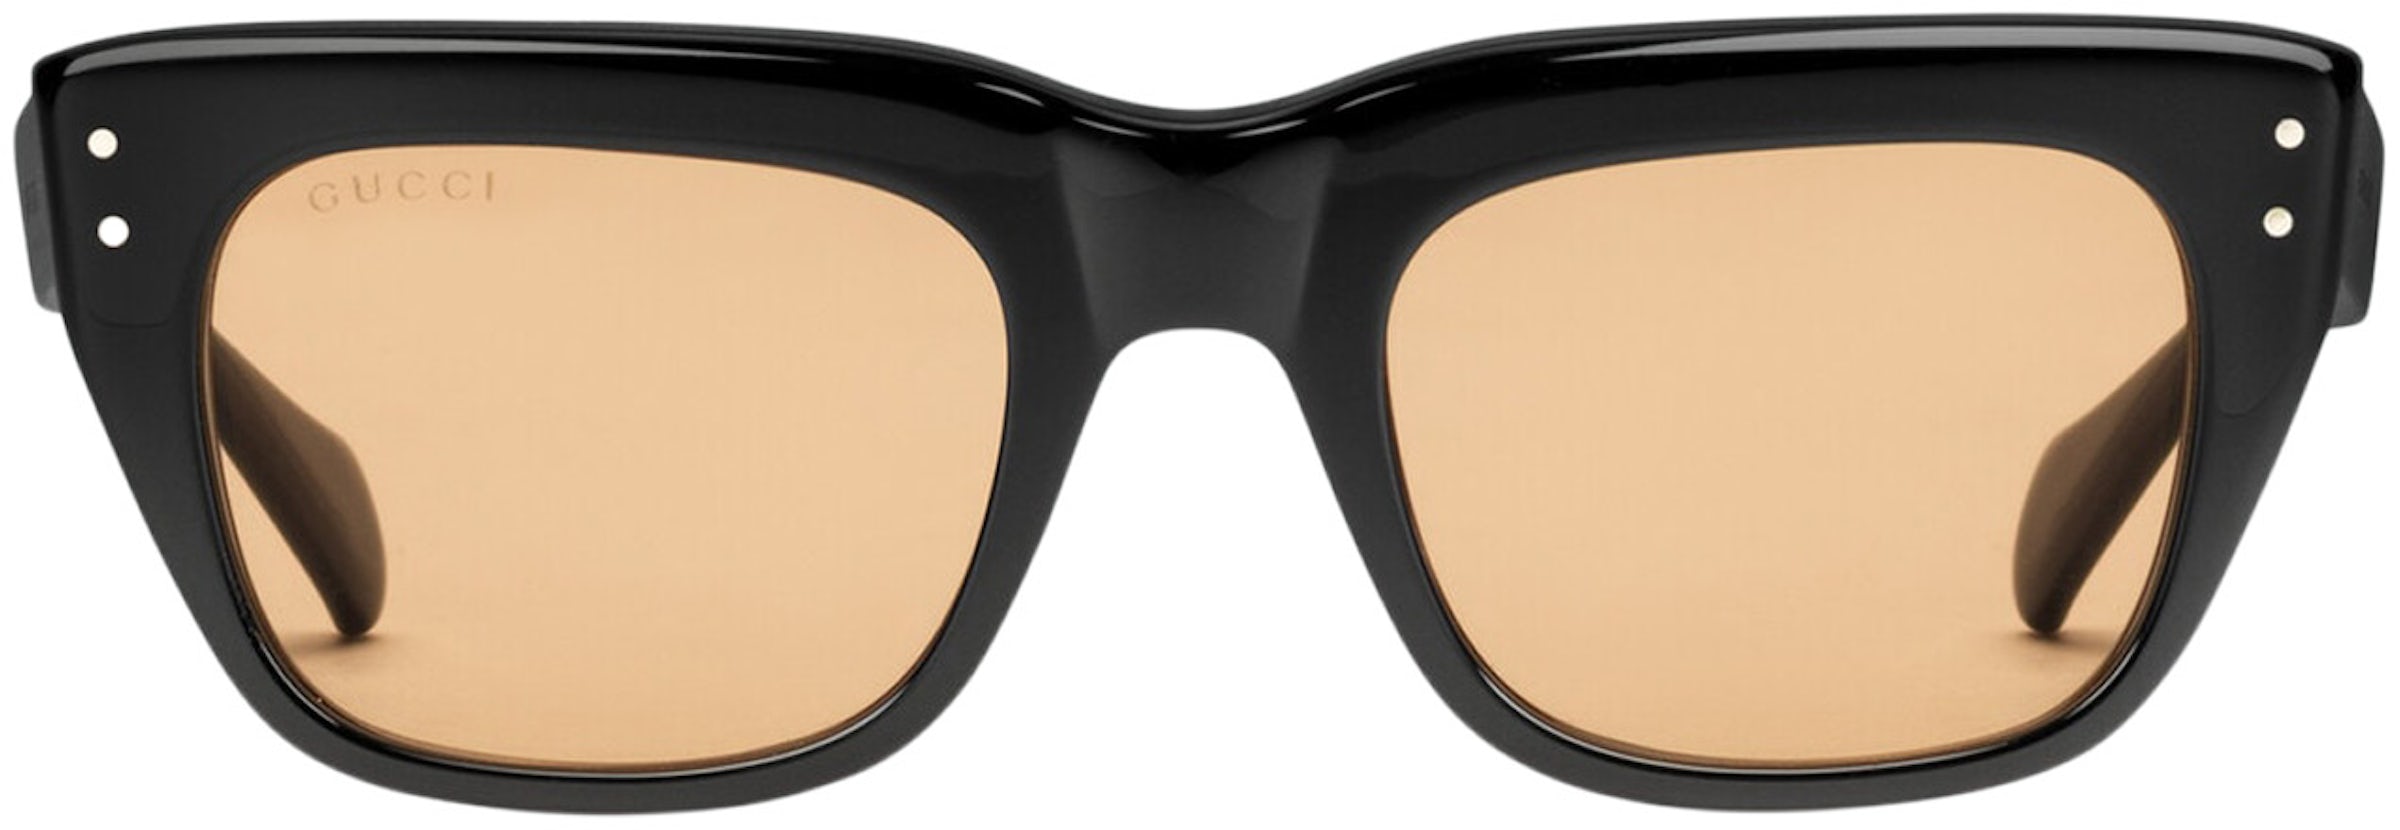 Louis Vuitton My Monogram Square Sunglasses Black (Z1523W/Z1523E